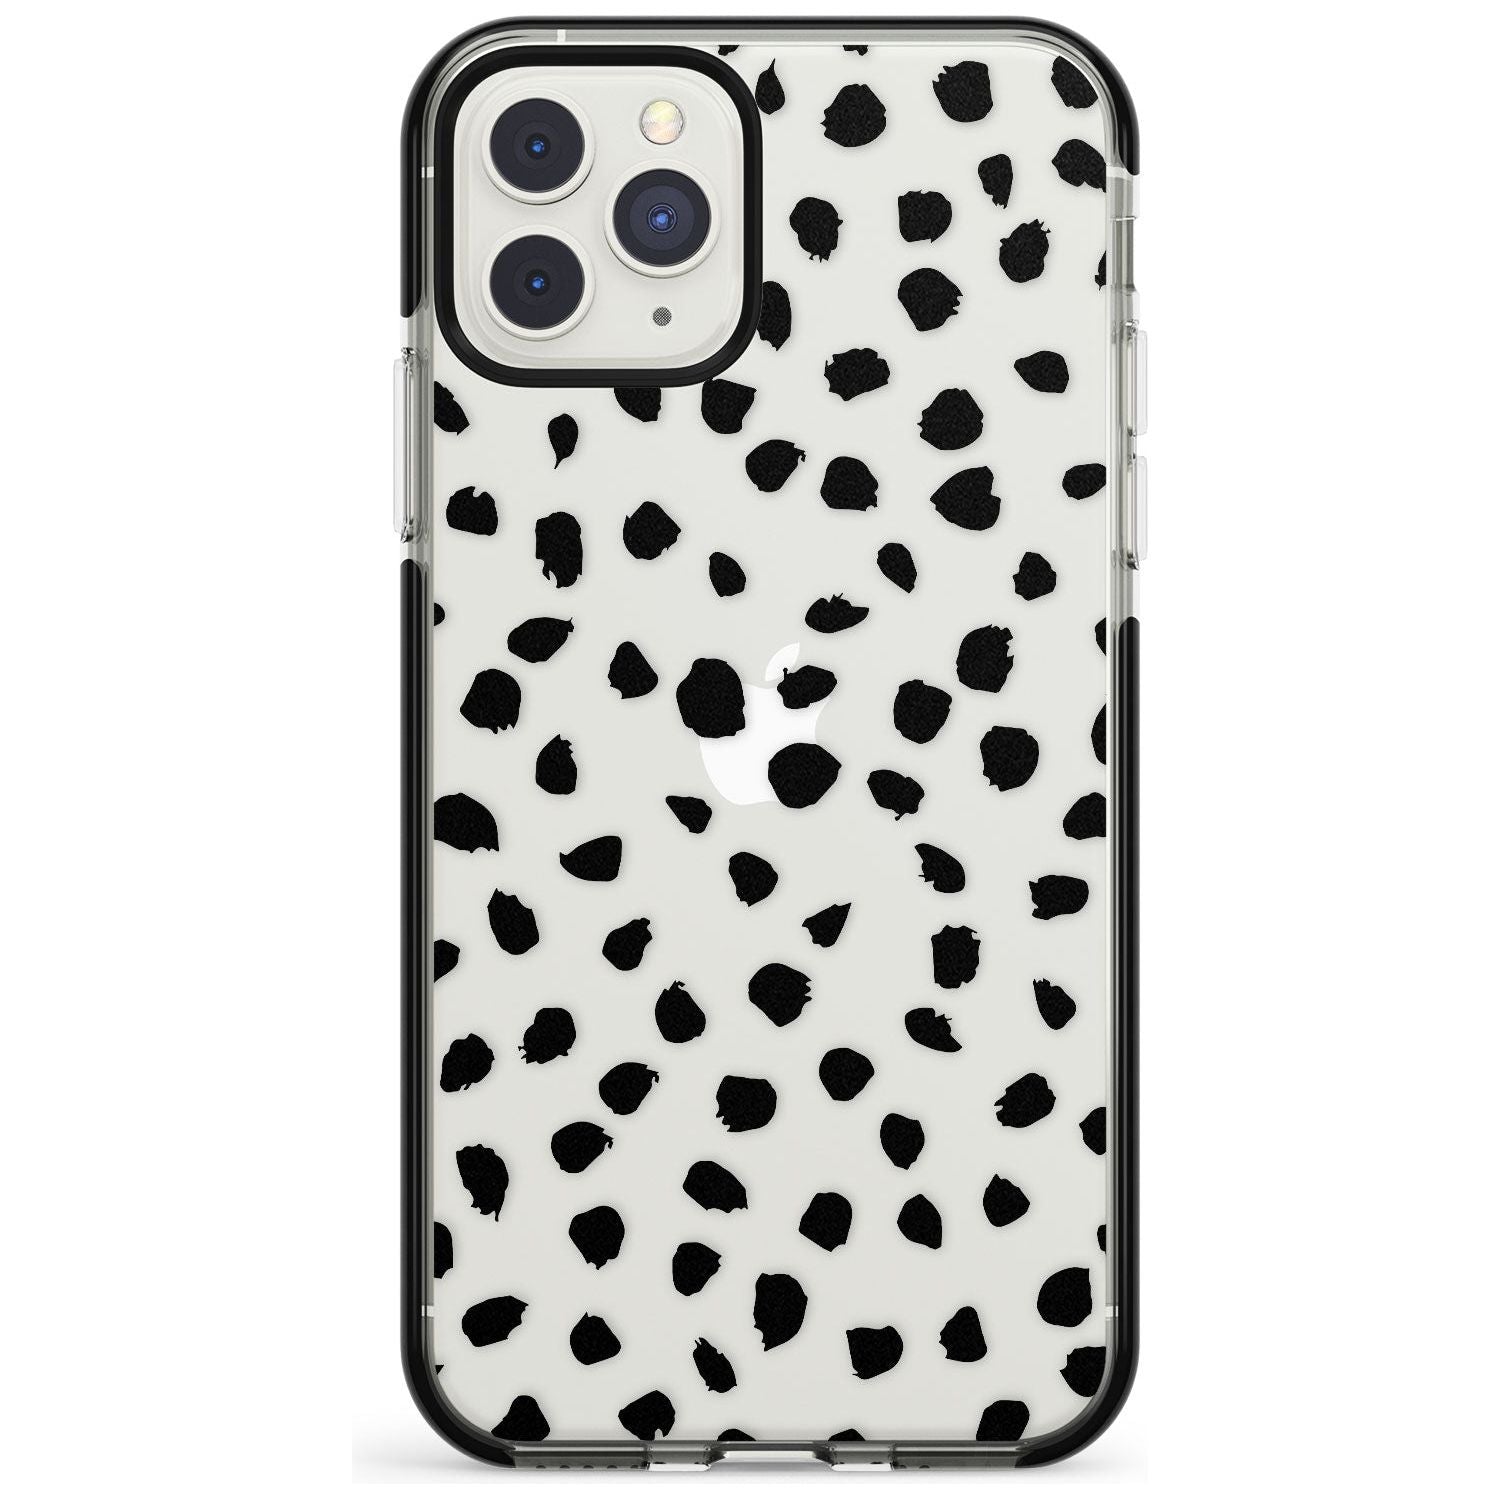 Black on Transparent Dalmatian Polka Dot Spots Black Impact Phone Case for iPhone 11 Pro Max